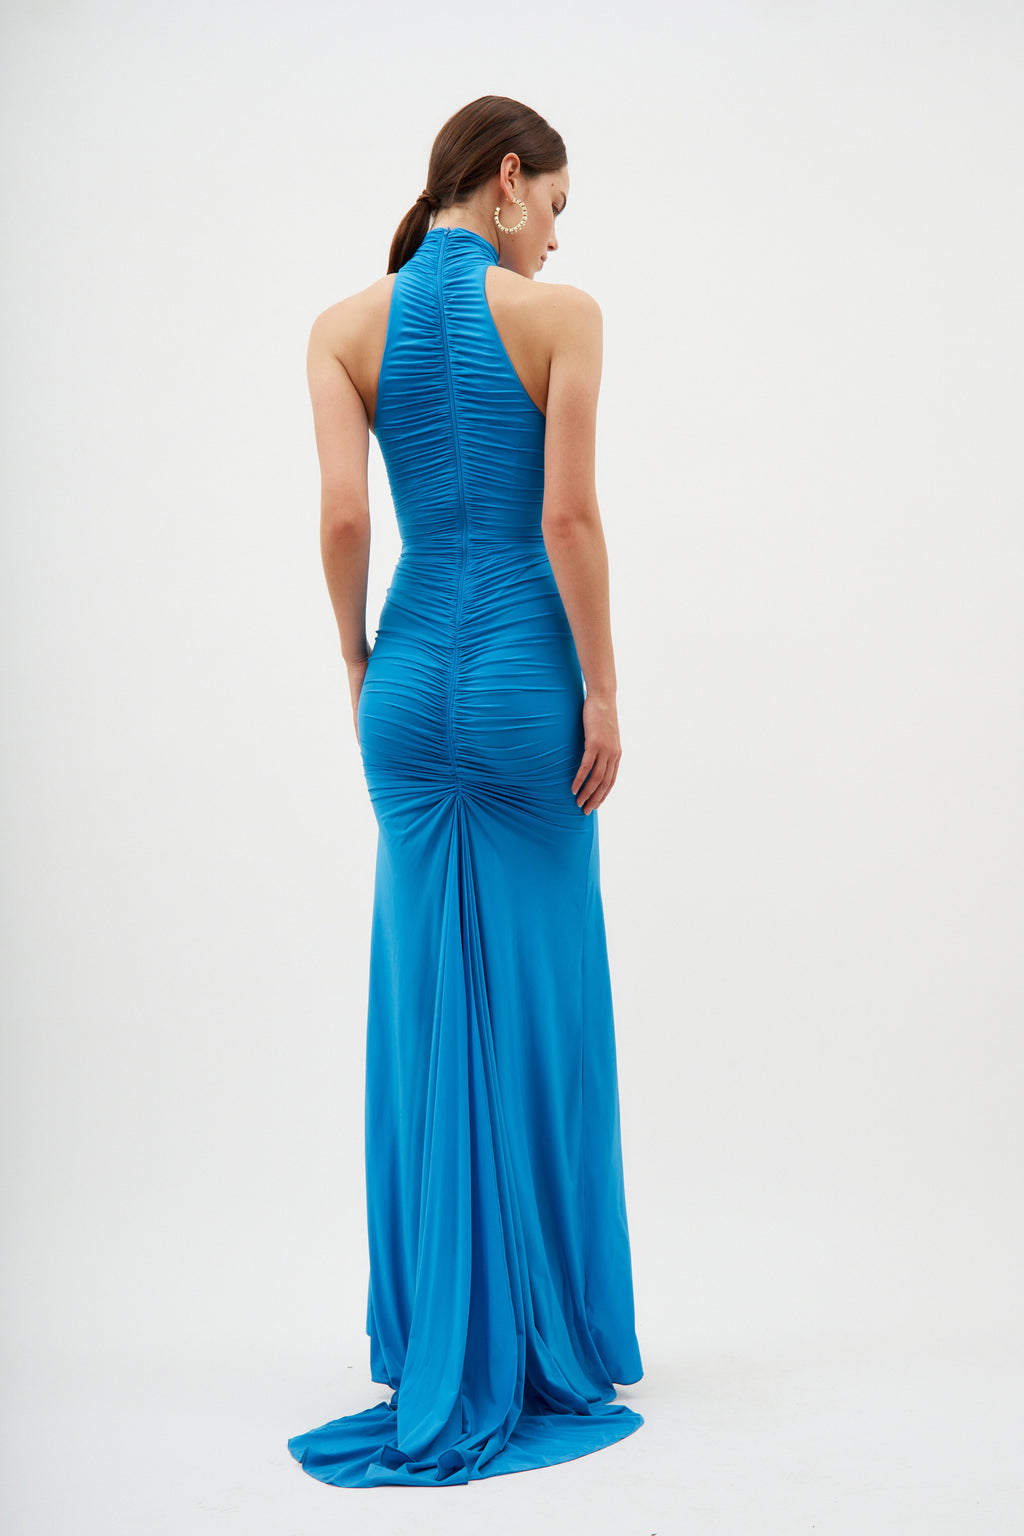 Lorne Blue Dress